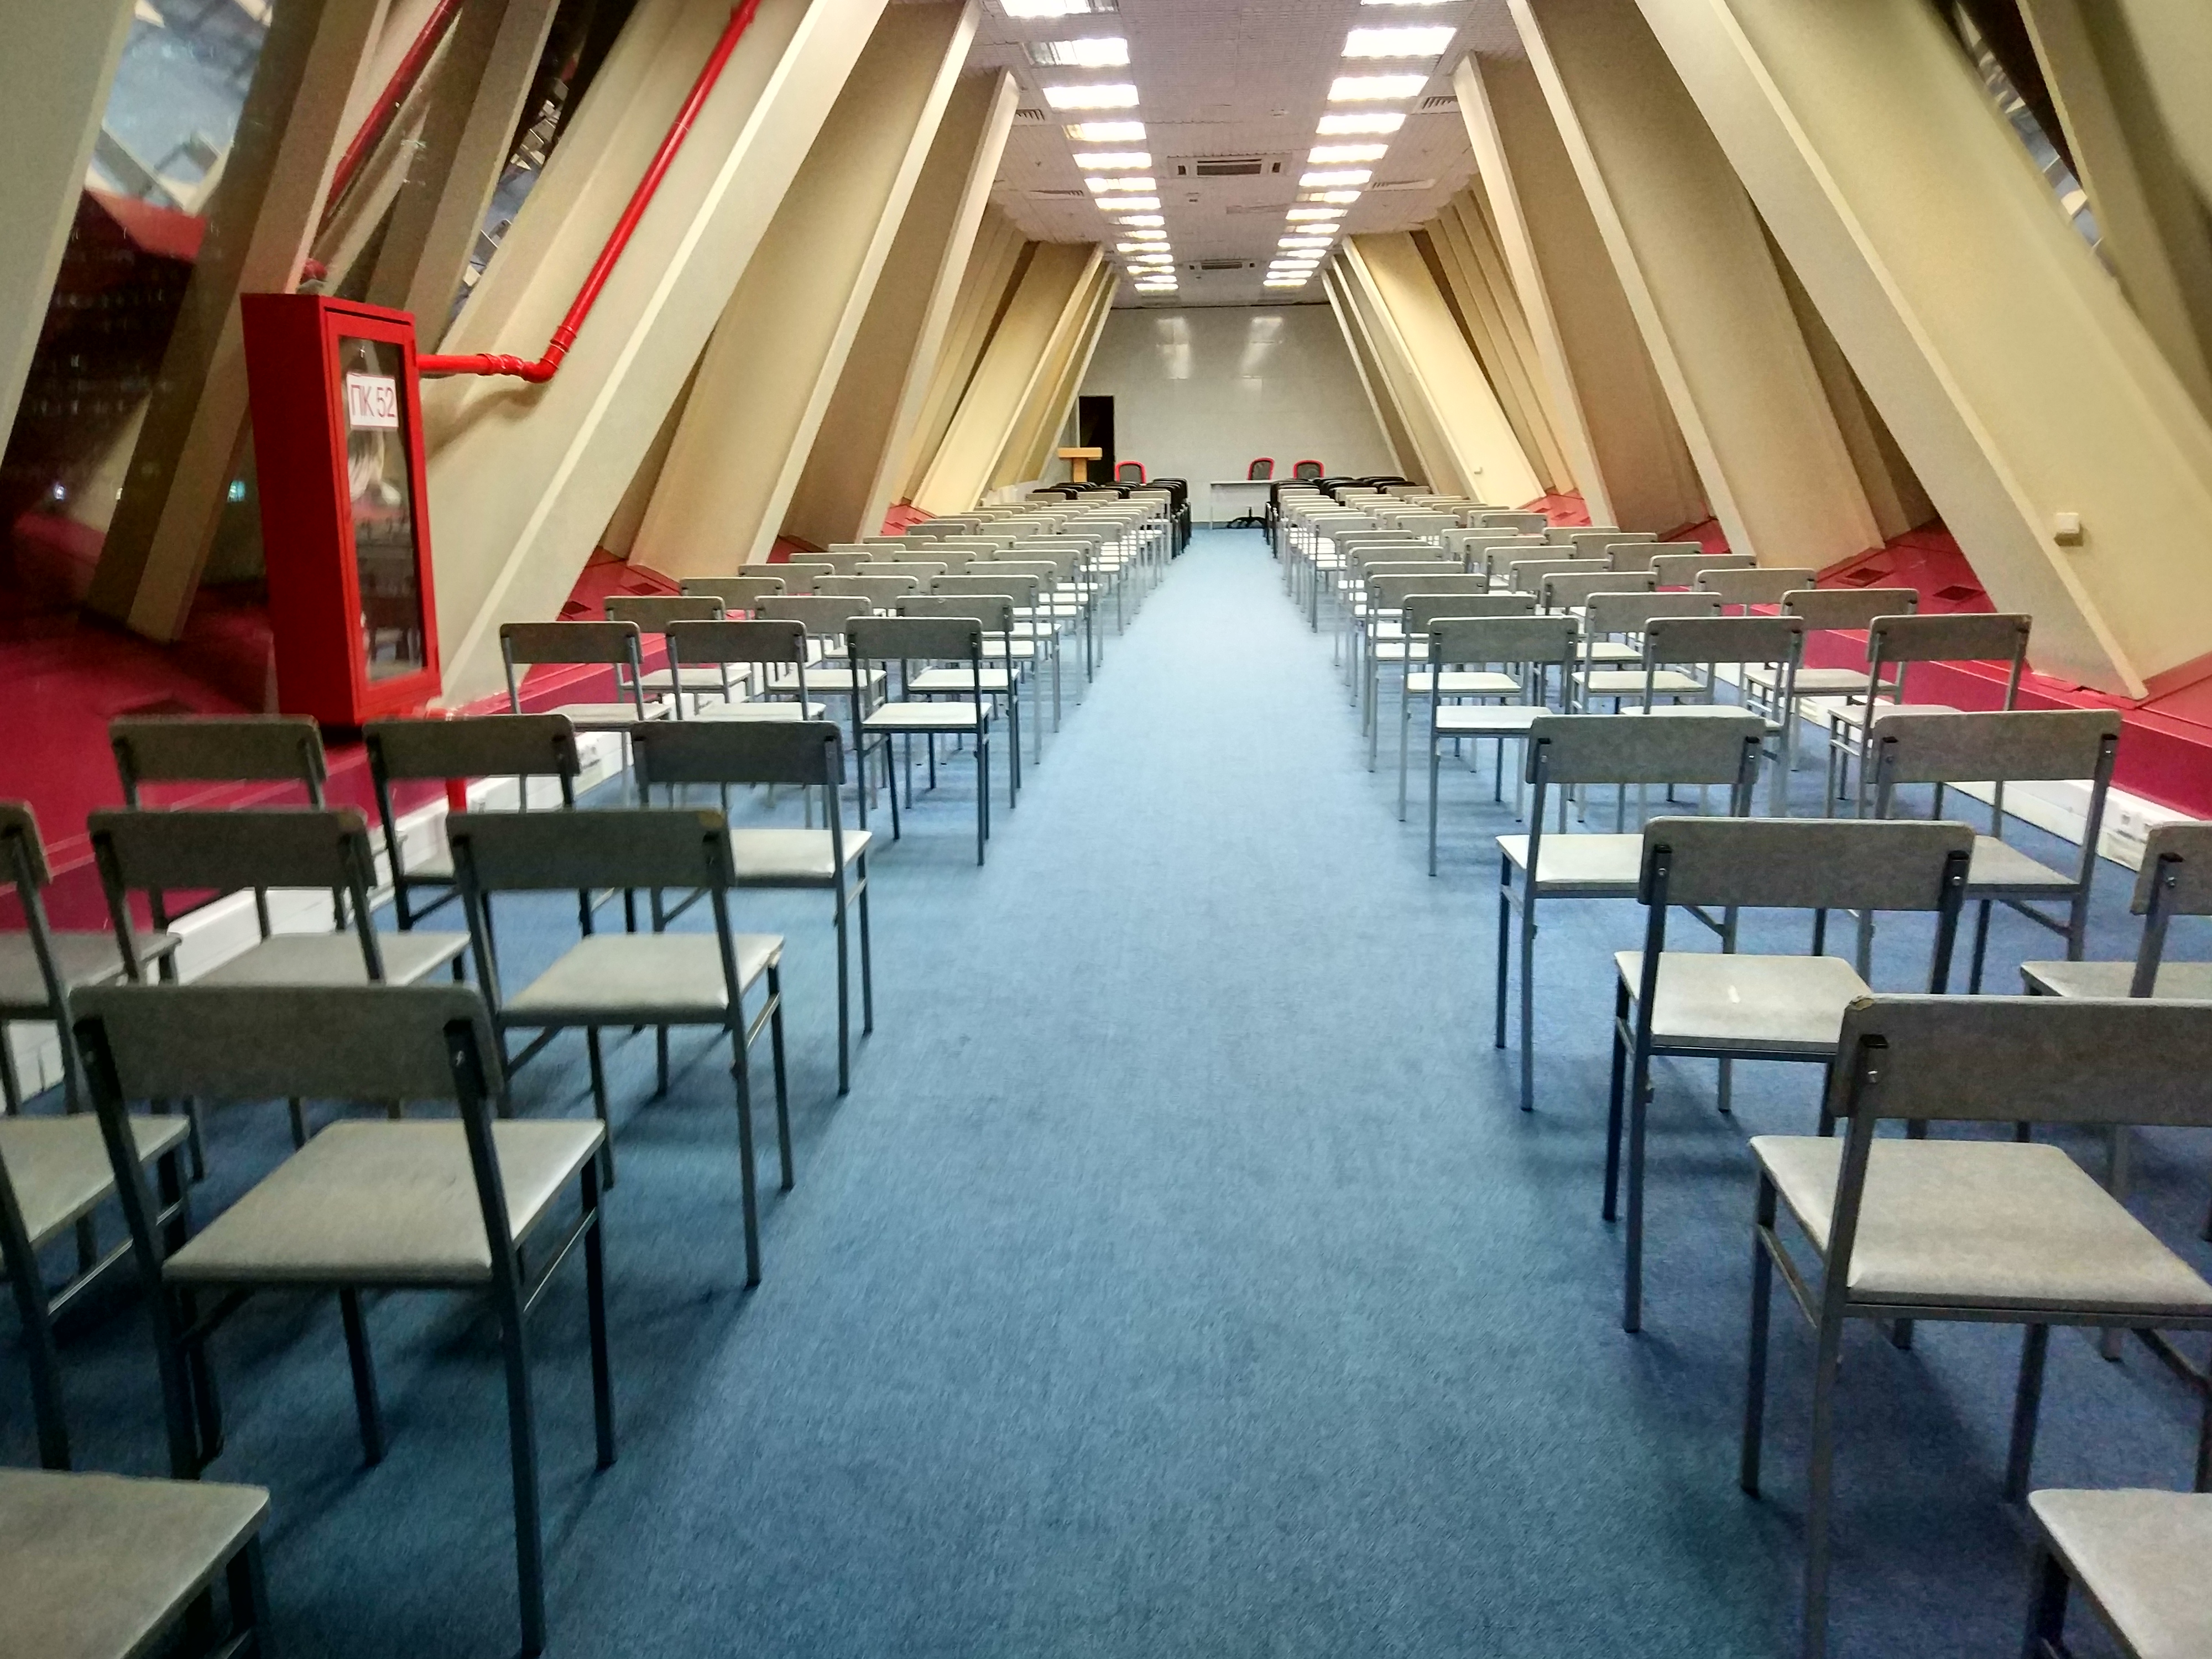 конференц зал москва сити мост Багратион аренда под метроприятие тренинг семинар конференция